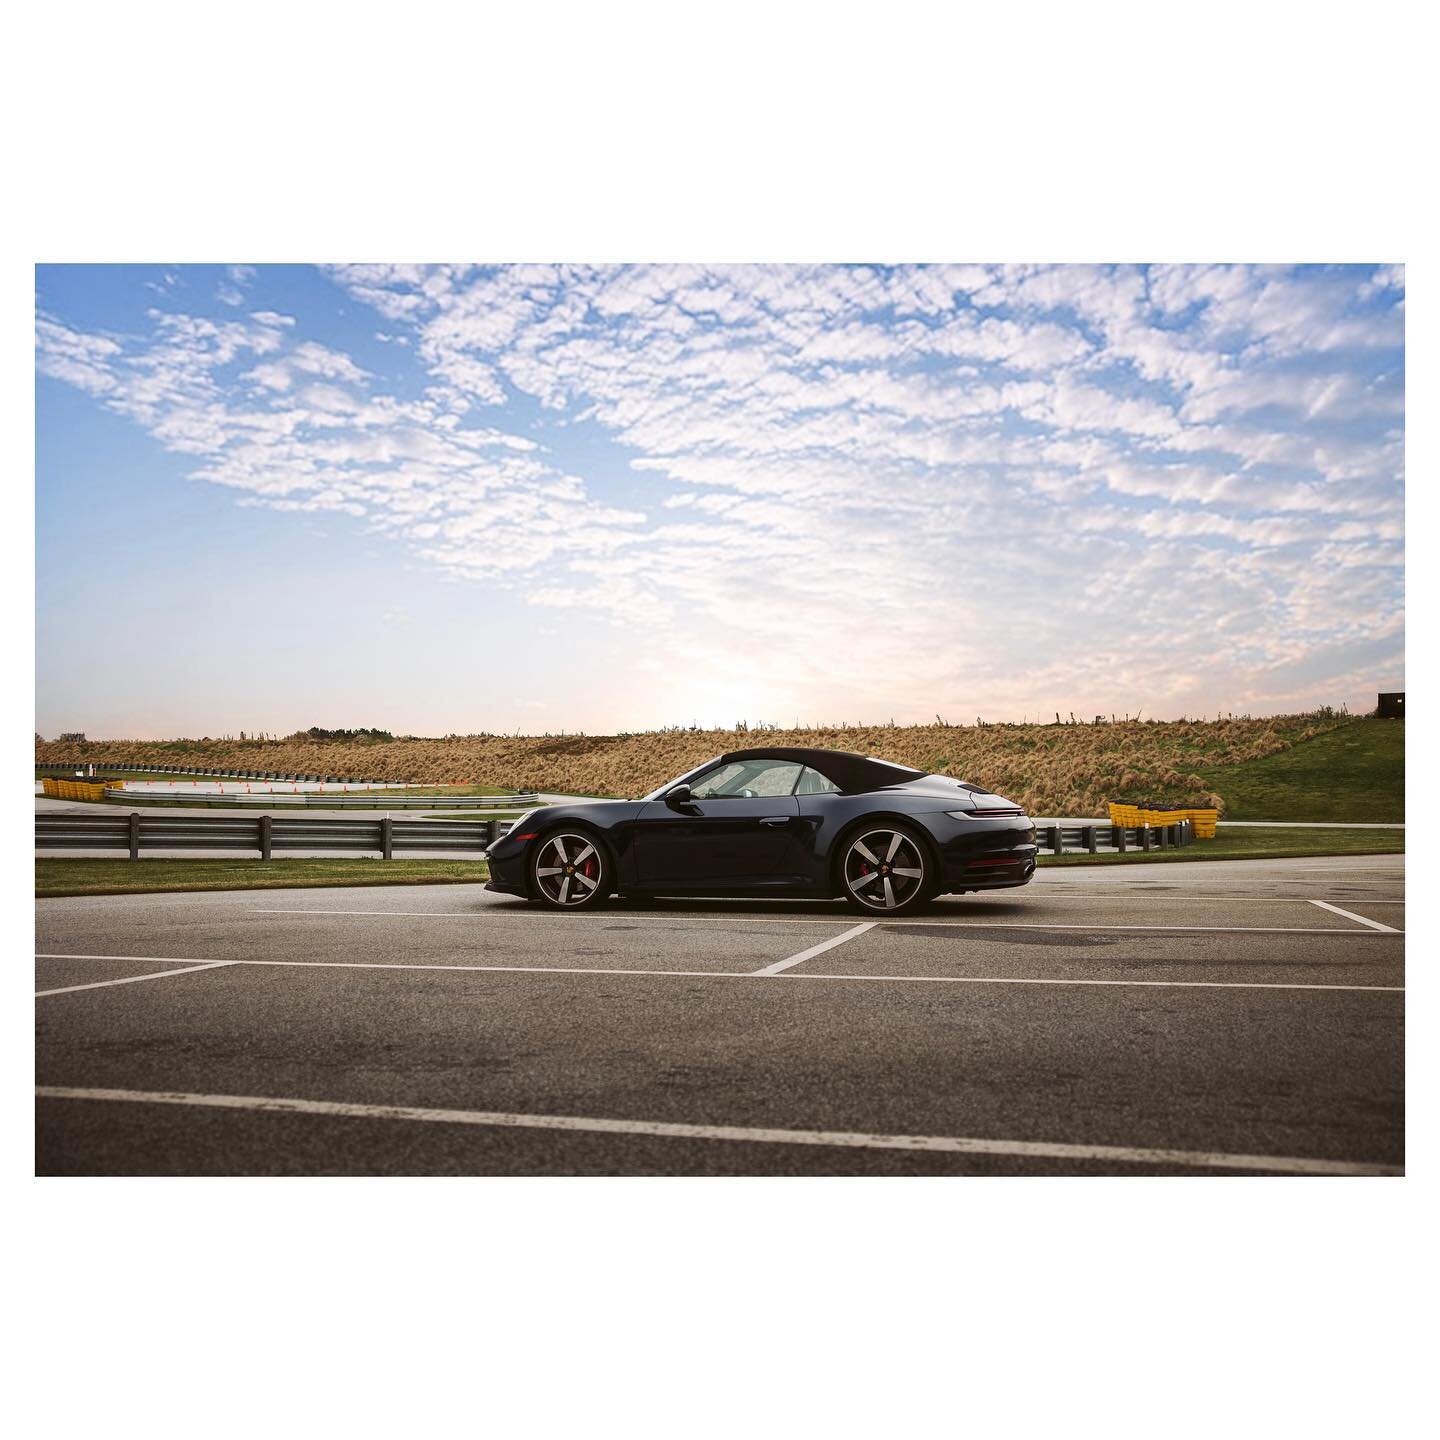 Track days with @pecatl, courtesy of @360converge.
.
.
.
#pecatl #porsche #trackdays #drift #atlanta&nbsp;#carphotography&nbsp;#lifestyle&nbsp;#automotivelifestyle&nbsp;#carsofinstagram #automotive&nbsp;#automotivephotography